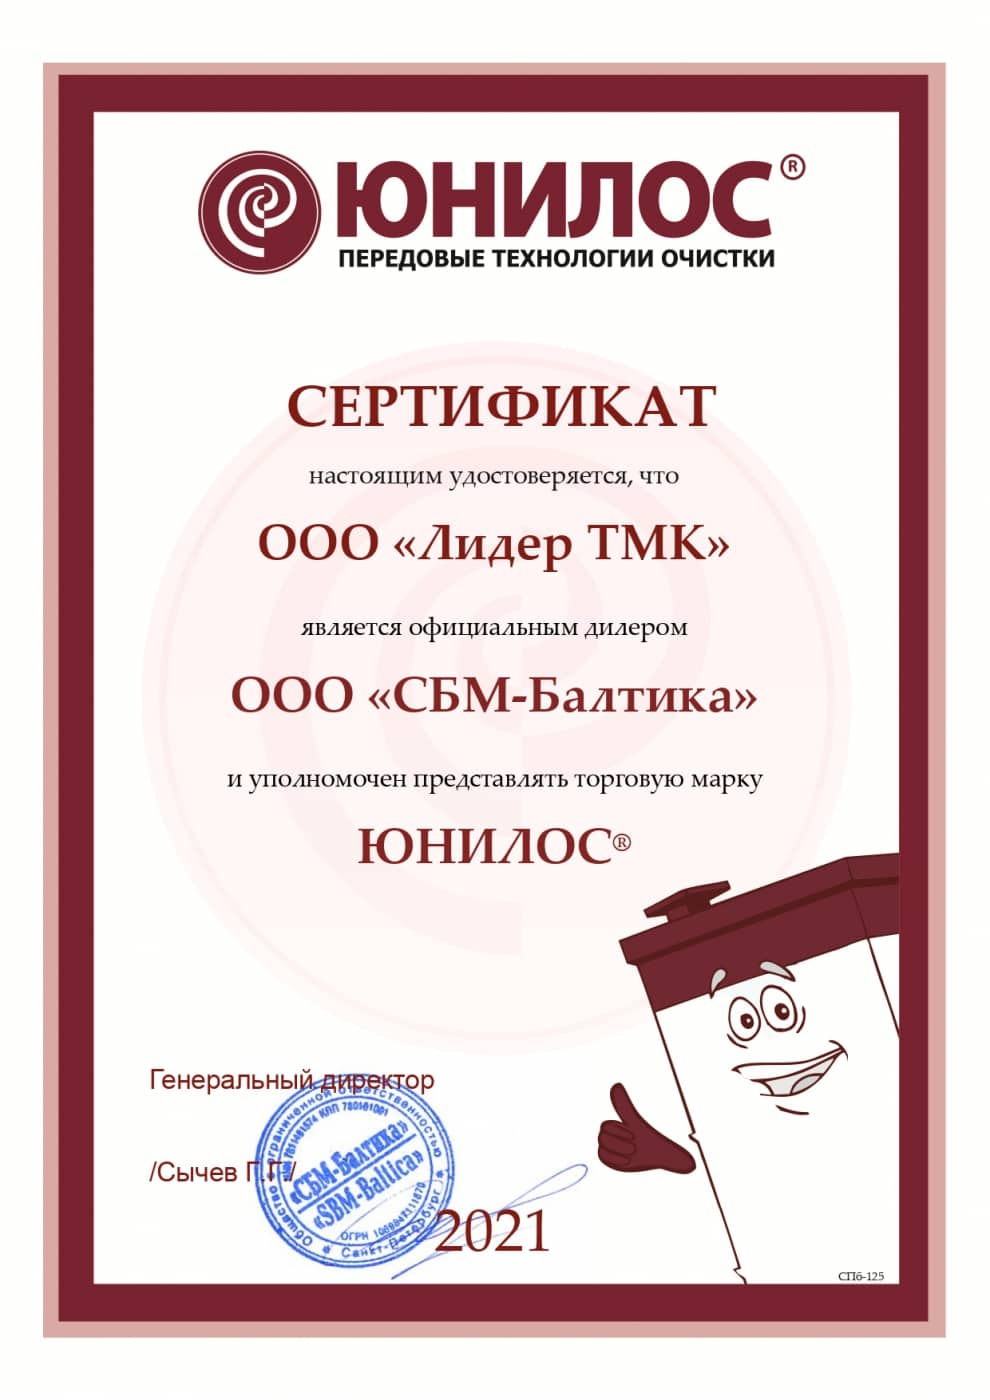 Септик Астра ДАБЛ 9 прин. сертификат